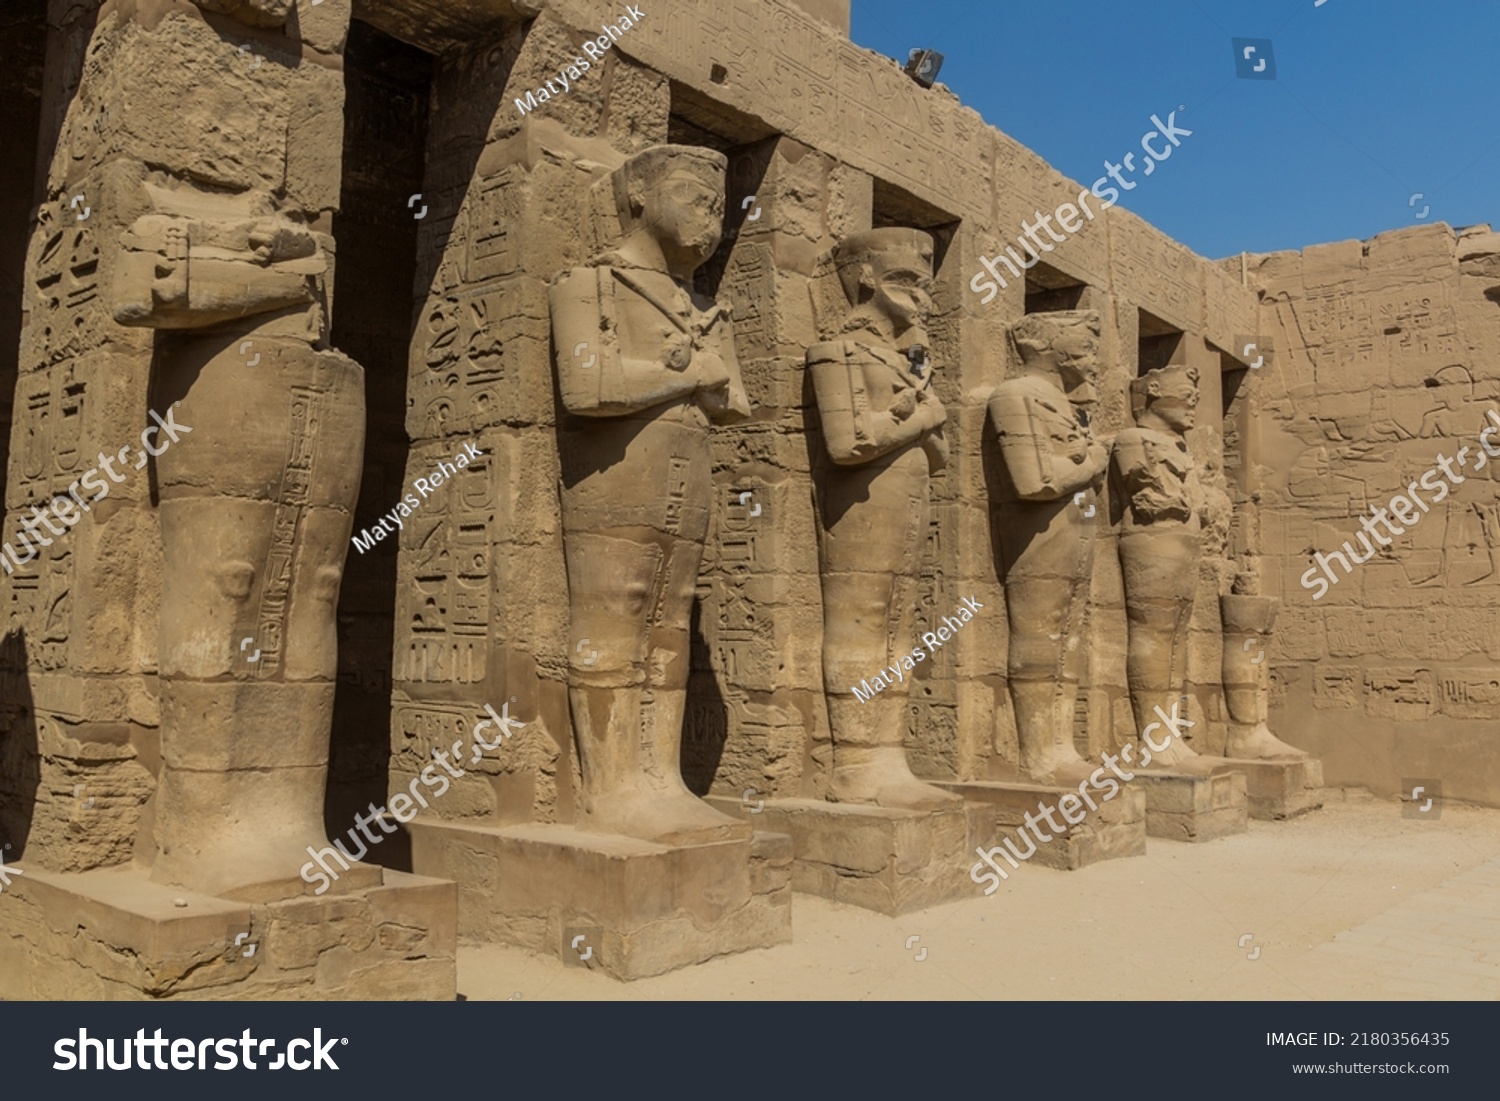 Pharaoh statues in the Amun Temple enclosure in Karnak, Egypt #2180356435